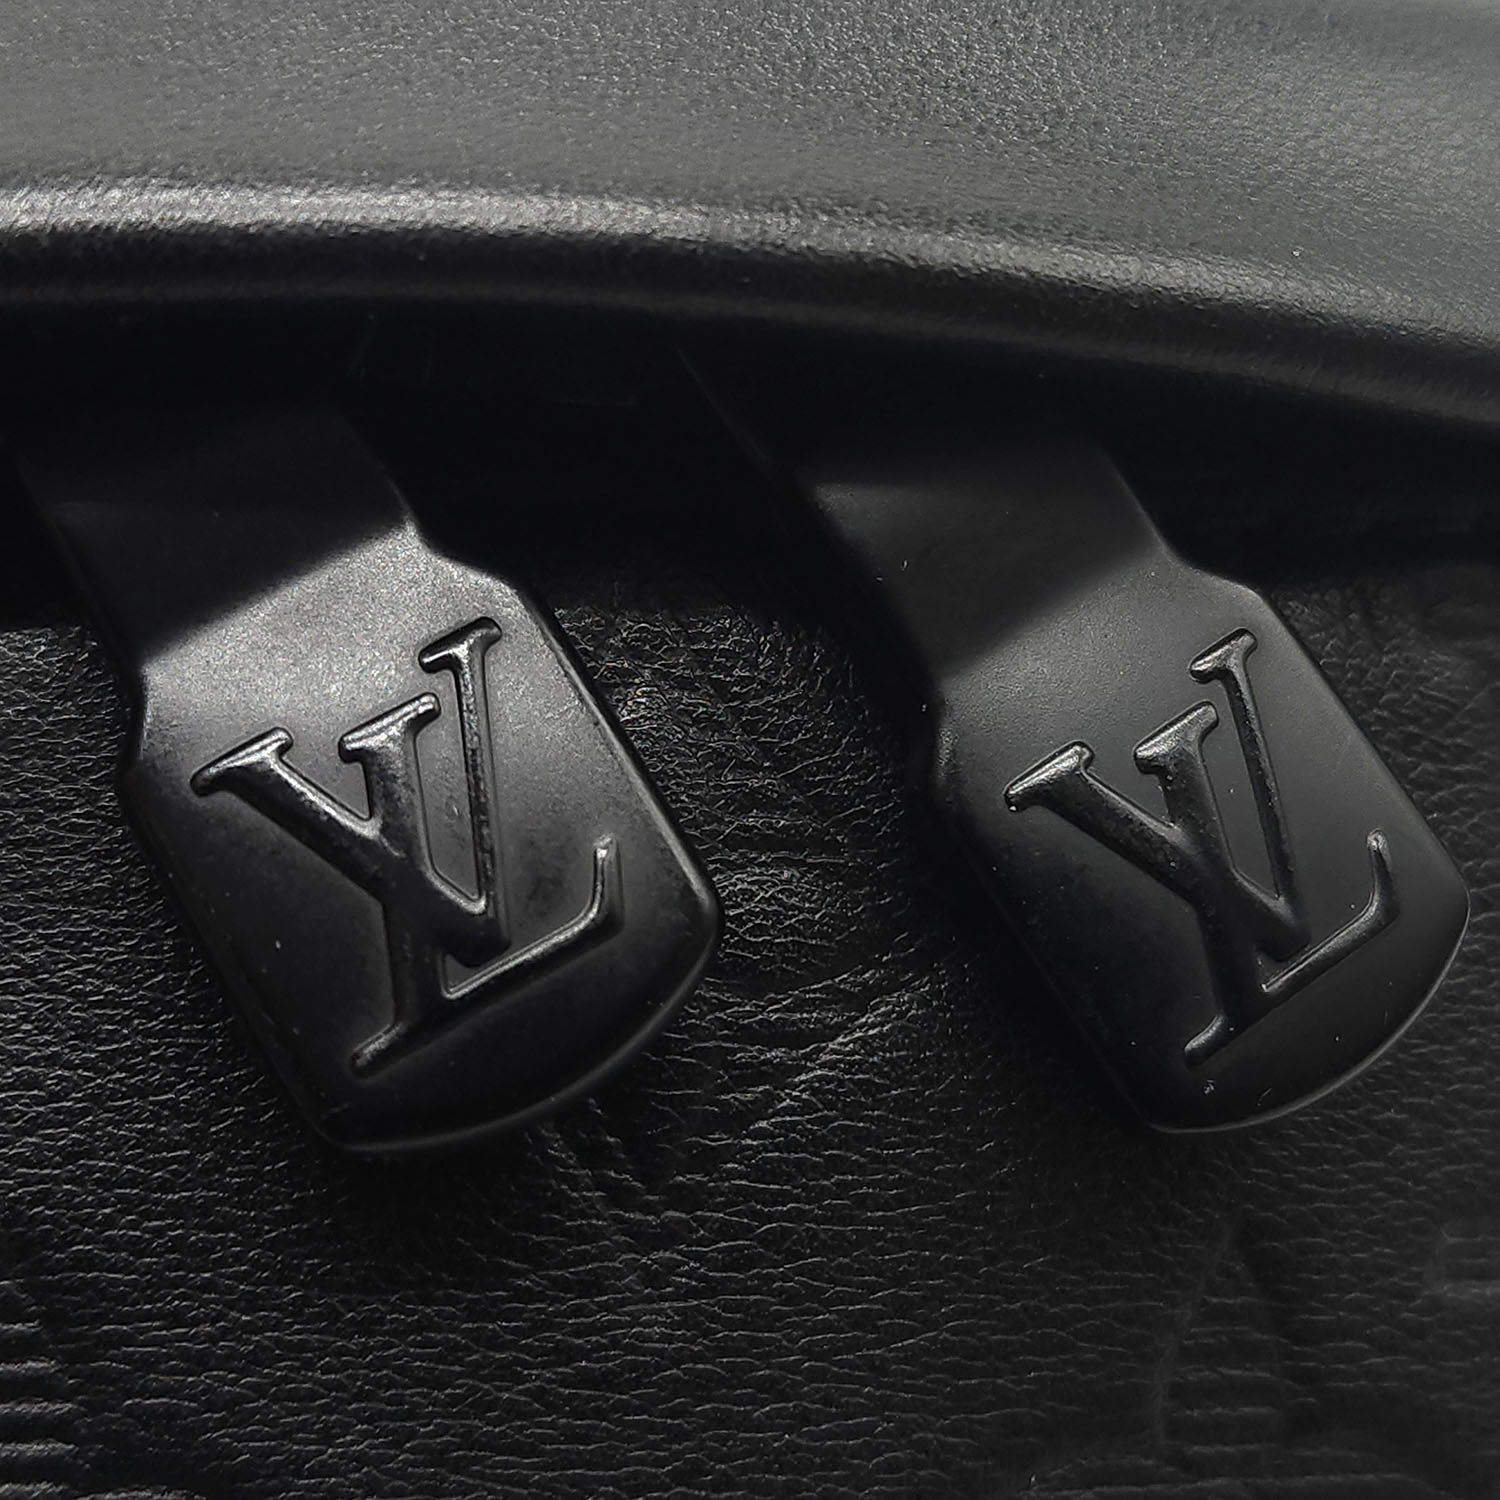 Discovery Bumbag PM Shadow – Keeks Designer Handbags